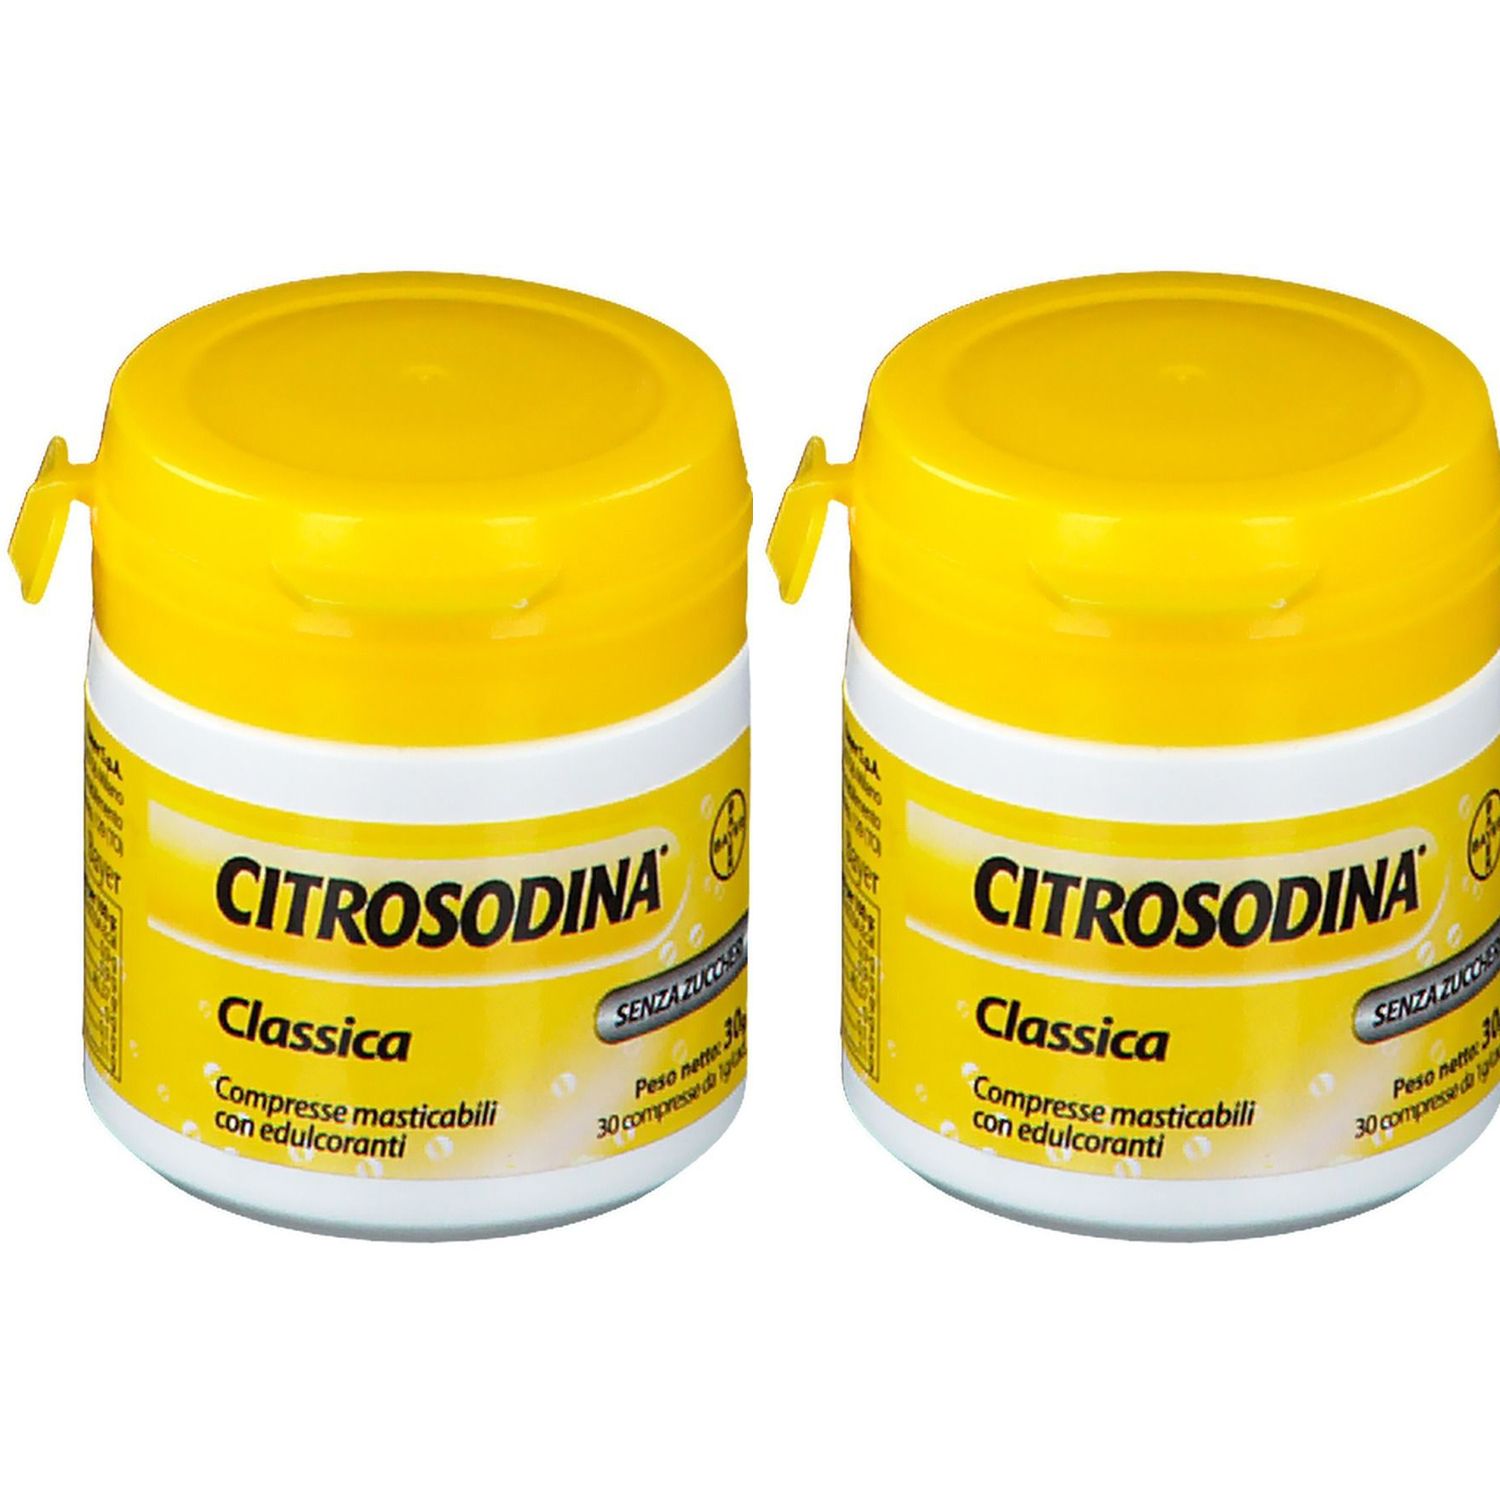 Citrosodina Classica Digestivo Compresse Masticabili Limone